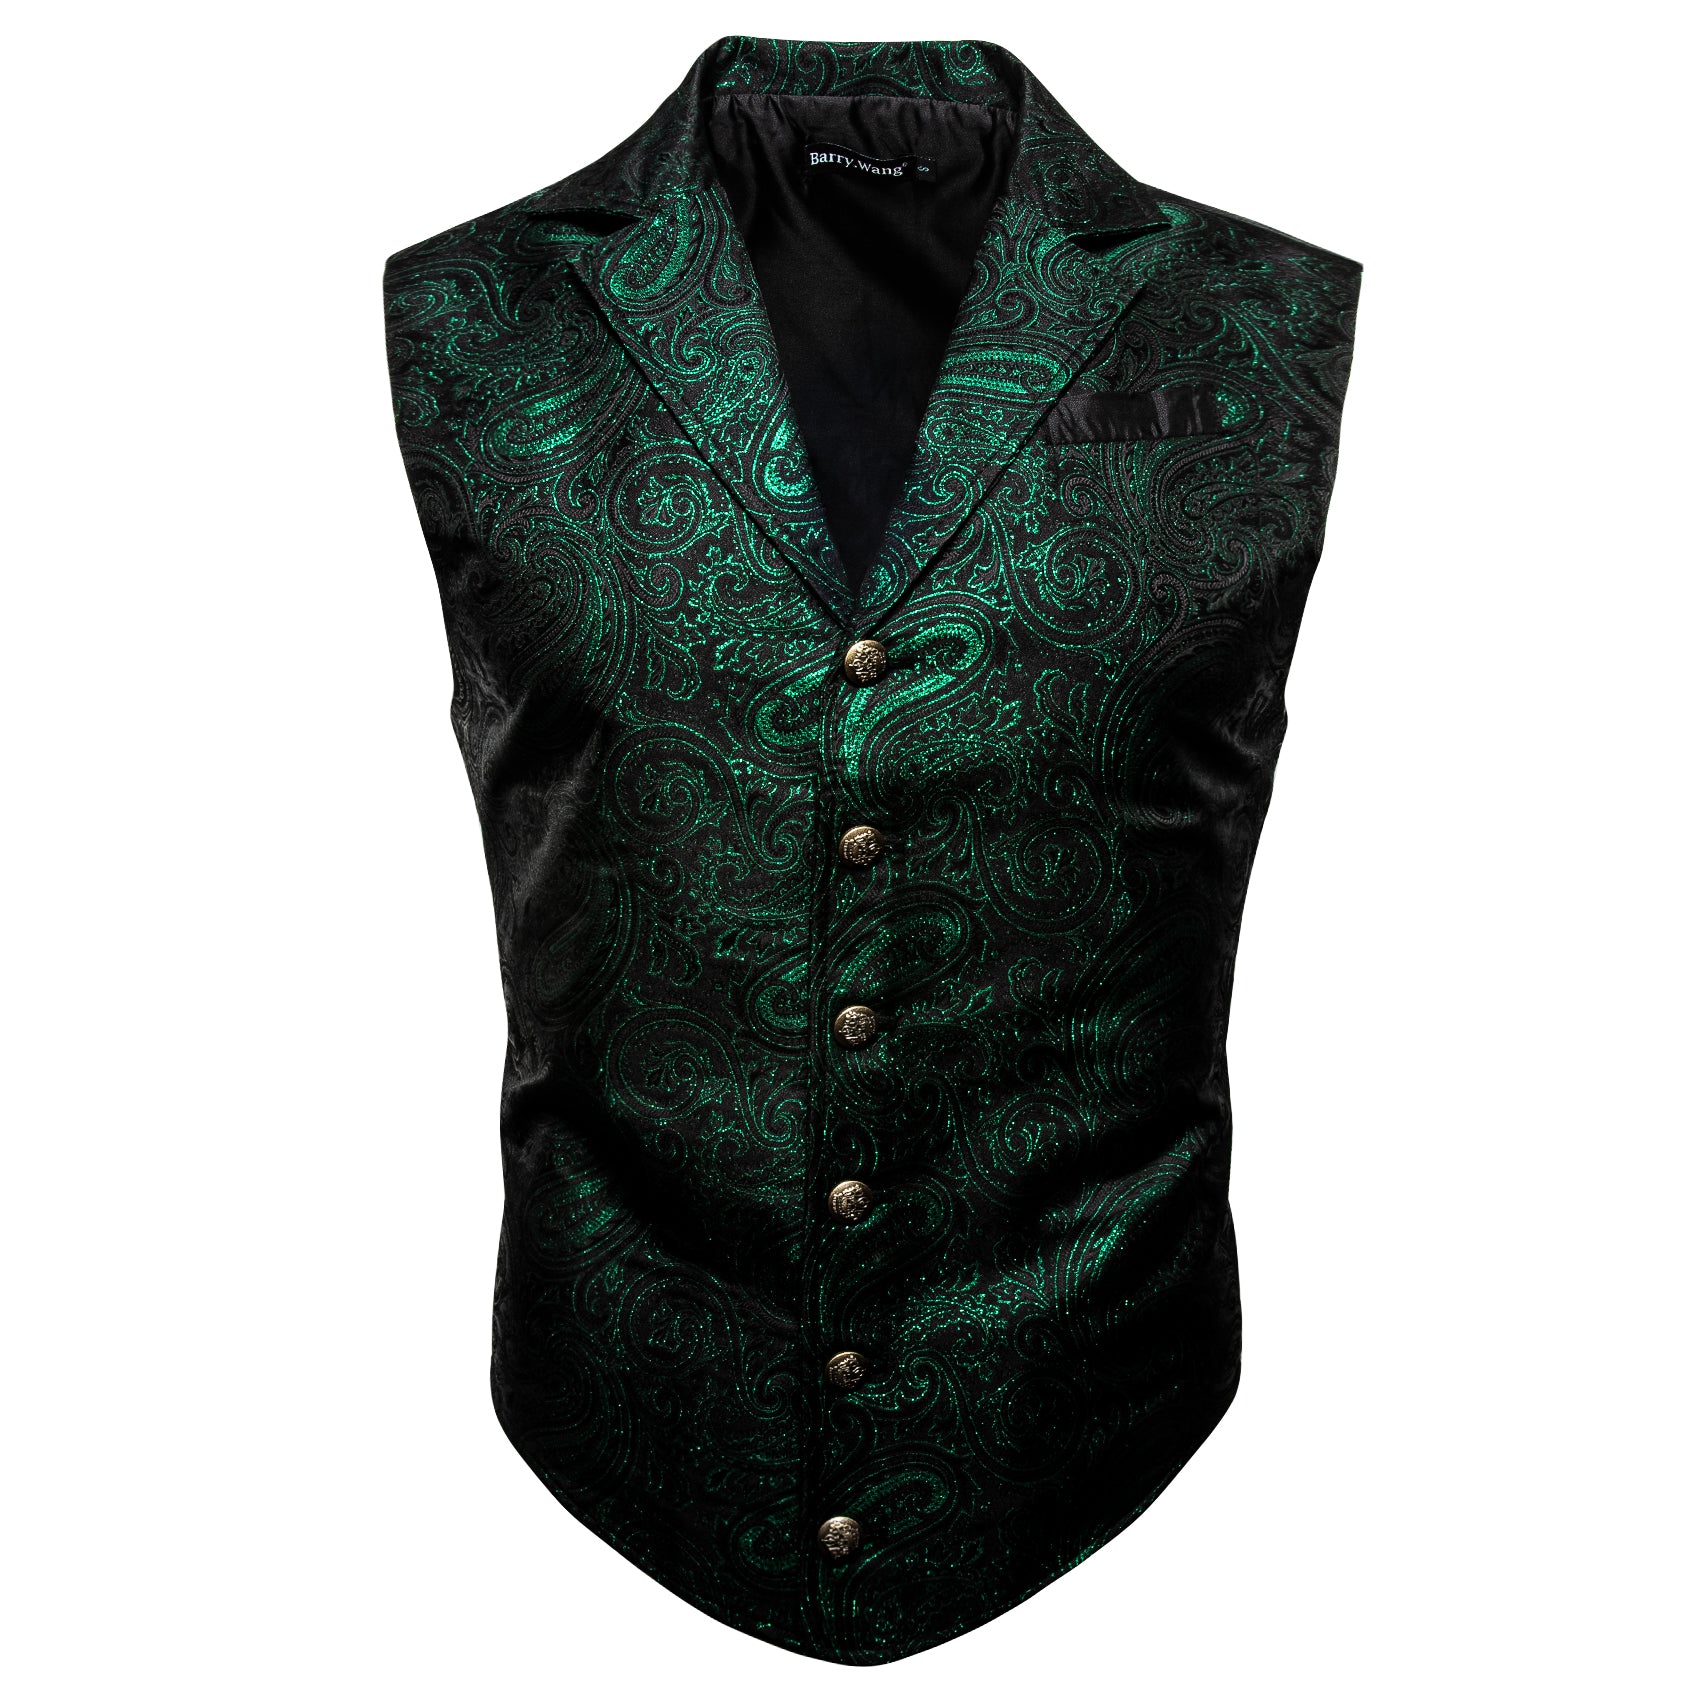 Barry.wang Men's Vest Green Paisley Jacquard Floral Silk Waistcoat Vest